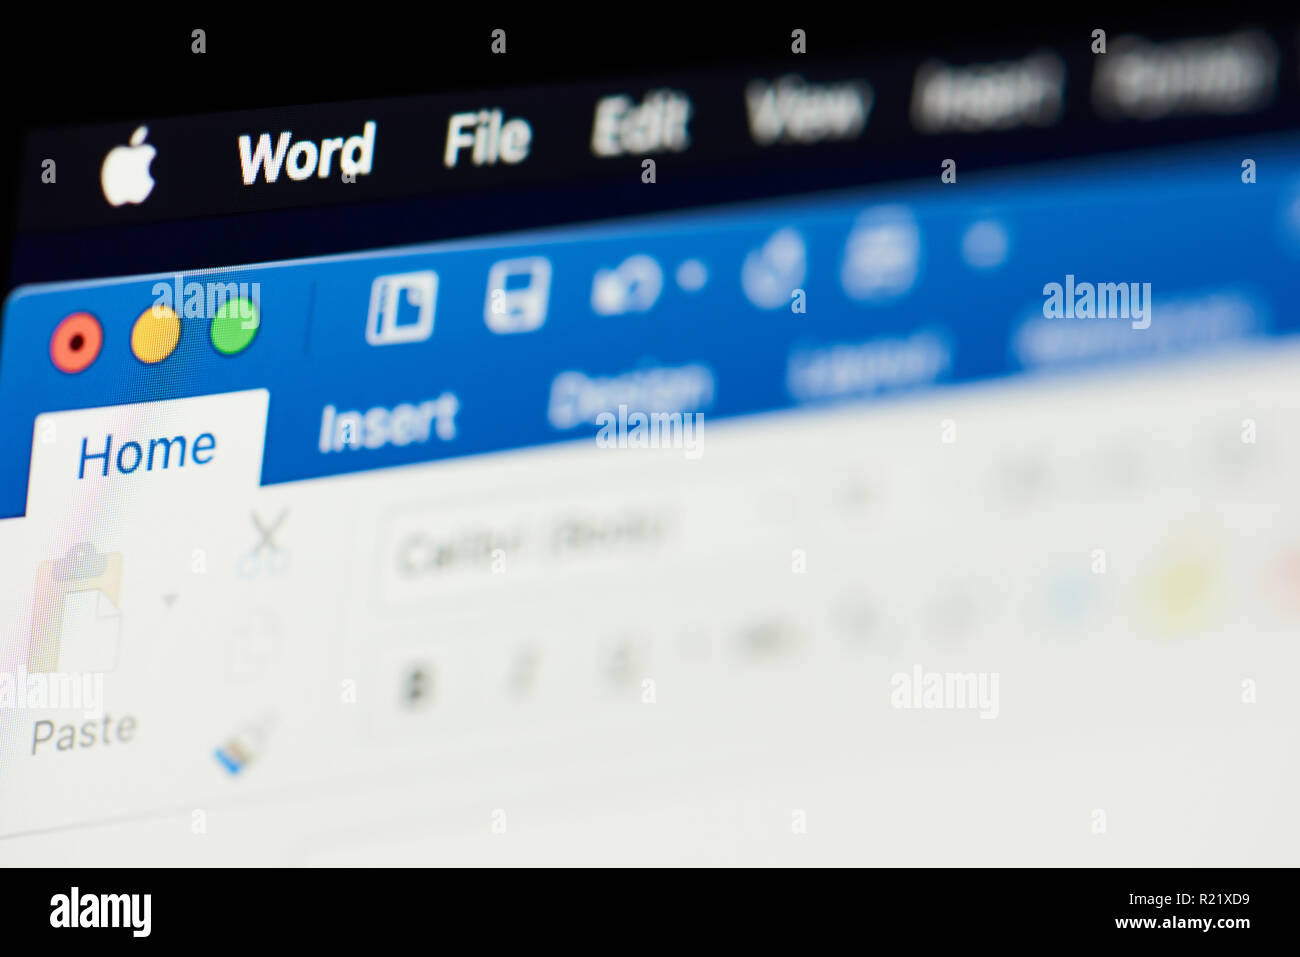 New York, USA - November 15, 2018: Microsoft Office Word home Menü Horizontal menu auf das Gerät mit dem Bildschirm pixelated Nähe zu sehen. Stockfoto